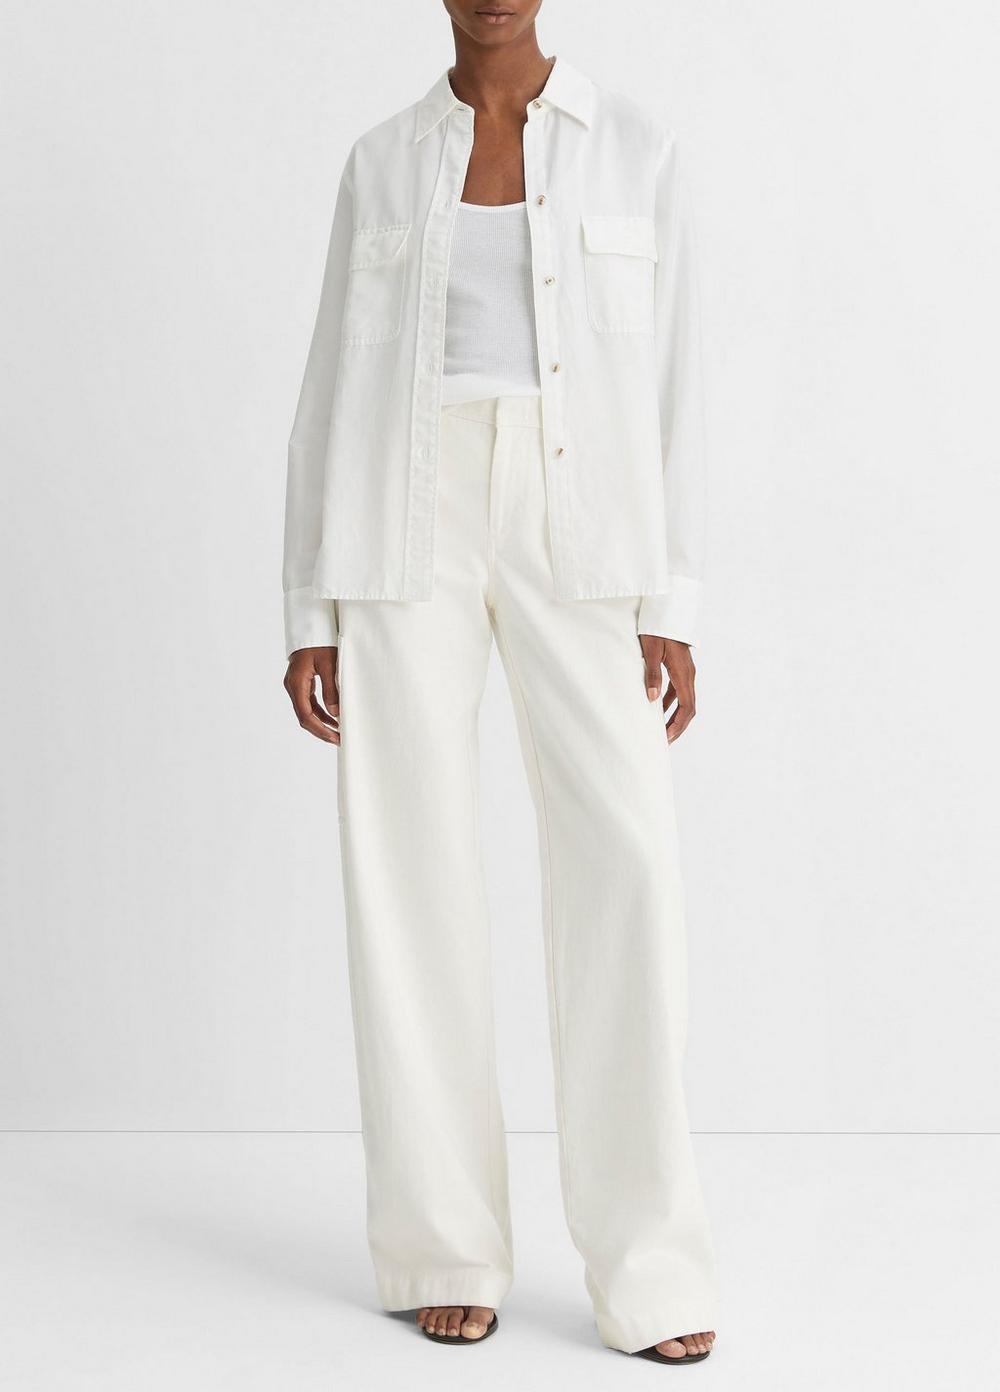 Cotton-Silk Utility Long-Sleeve Shirt, White, Size S Vince